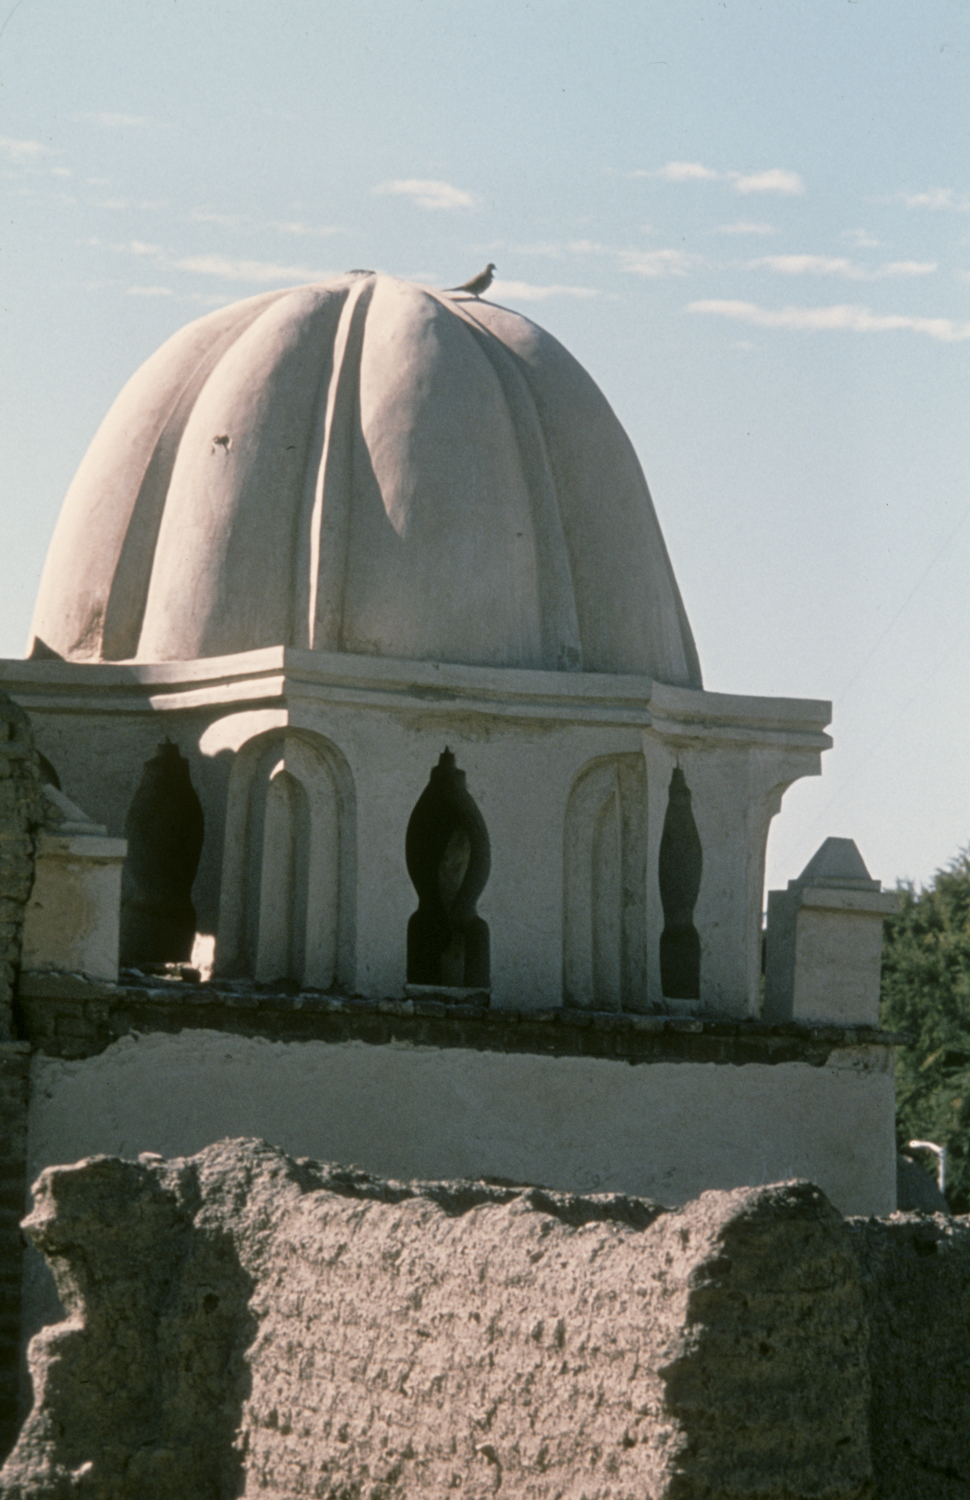 Detail of a mausoleum dome